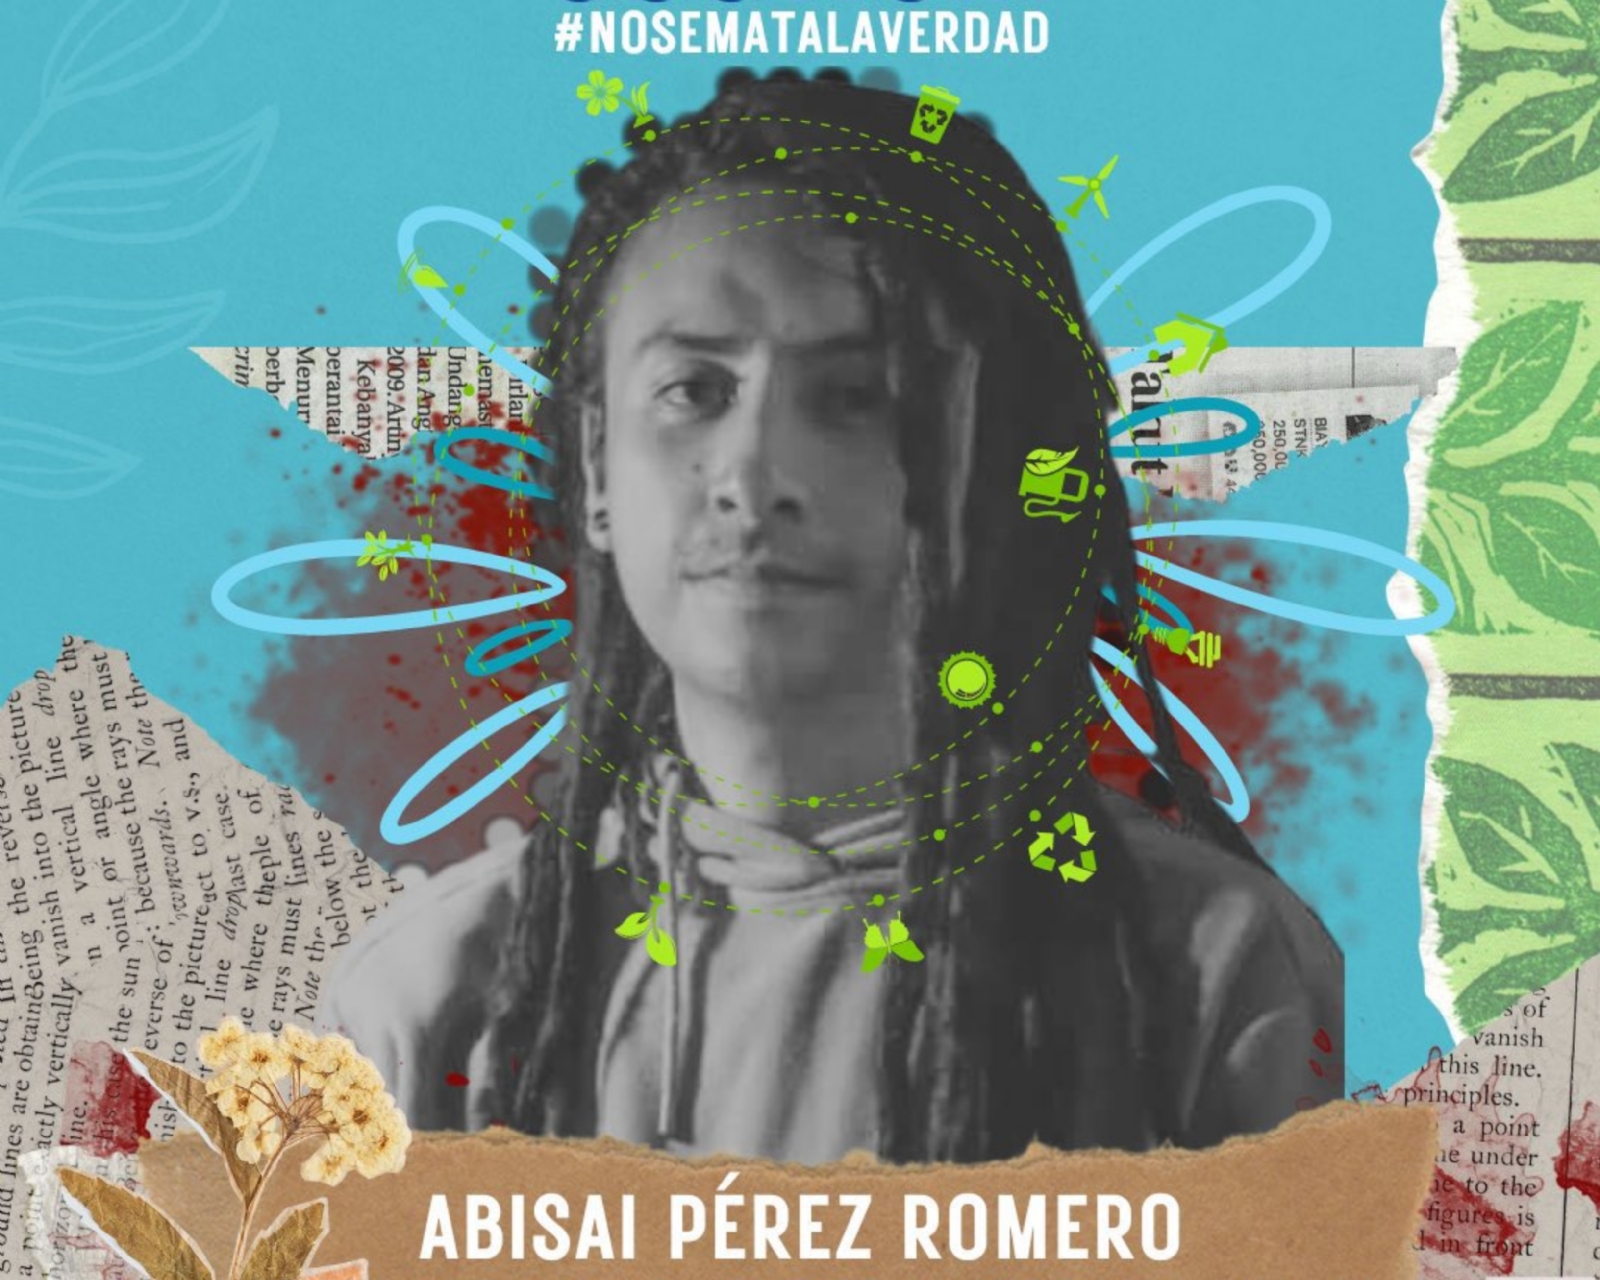 Abisai Pérez Romero periodista y activista asesinado